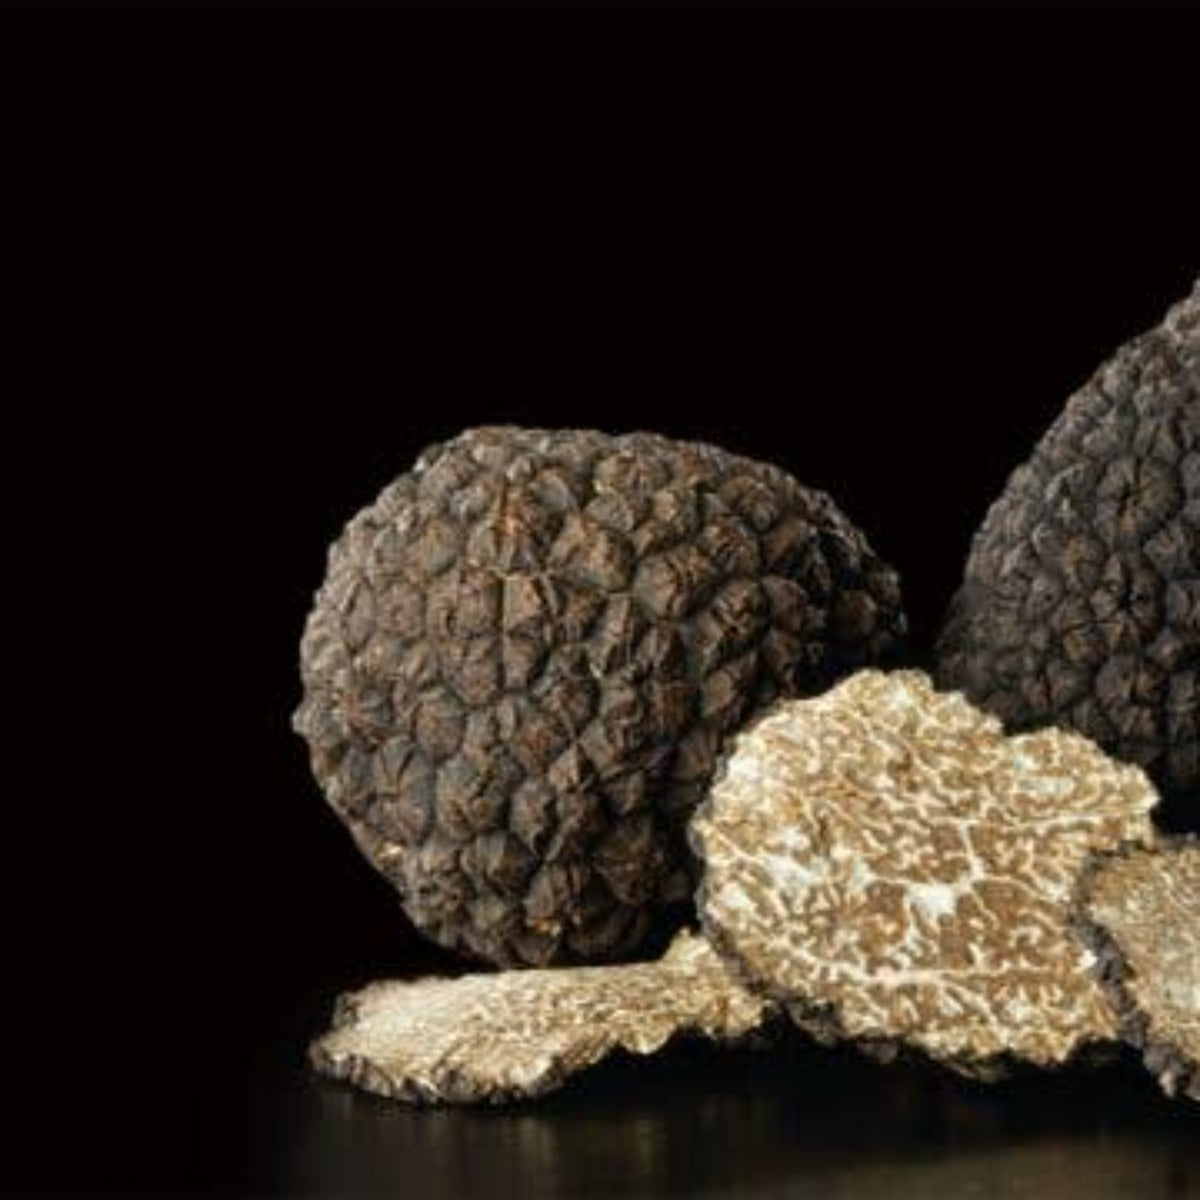 photo of a black truffle